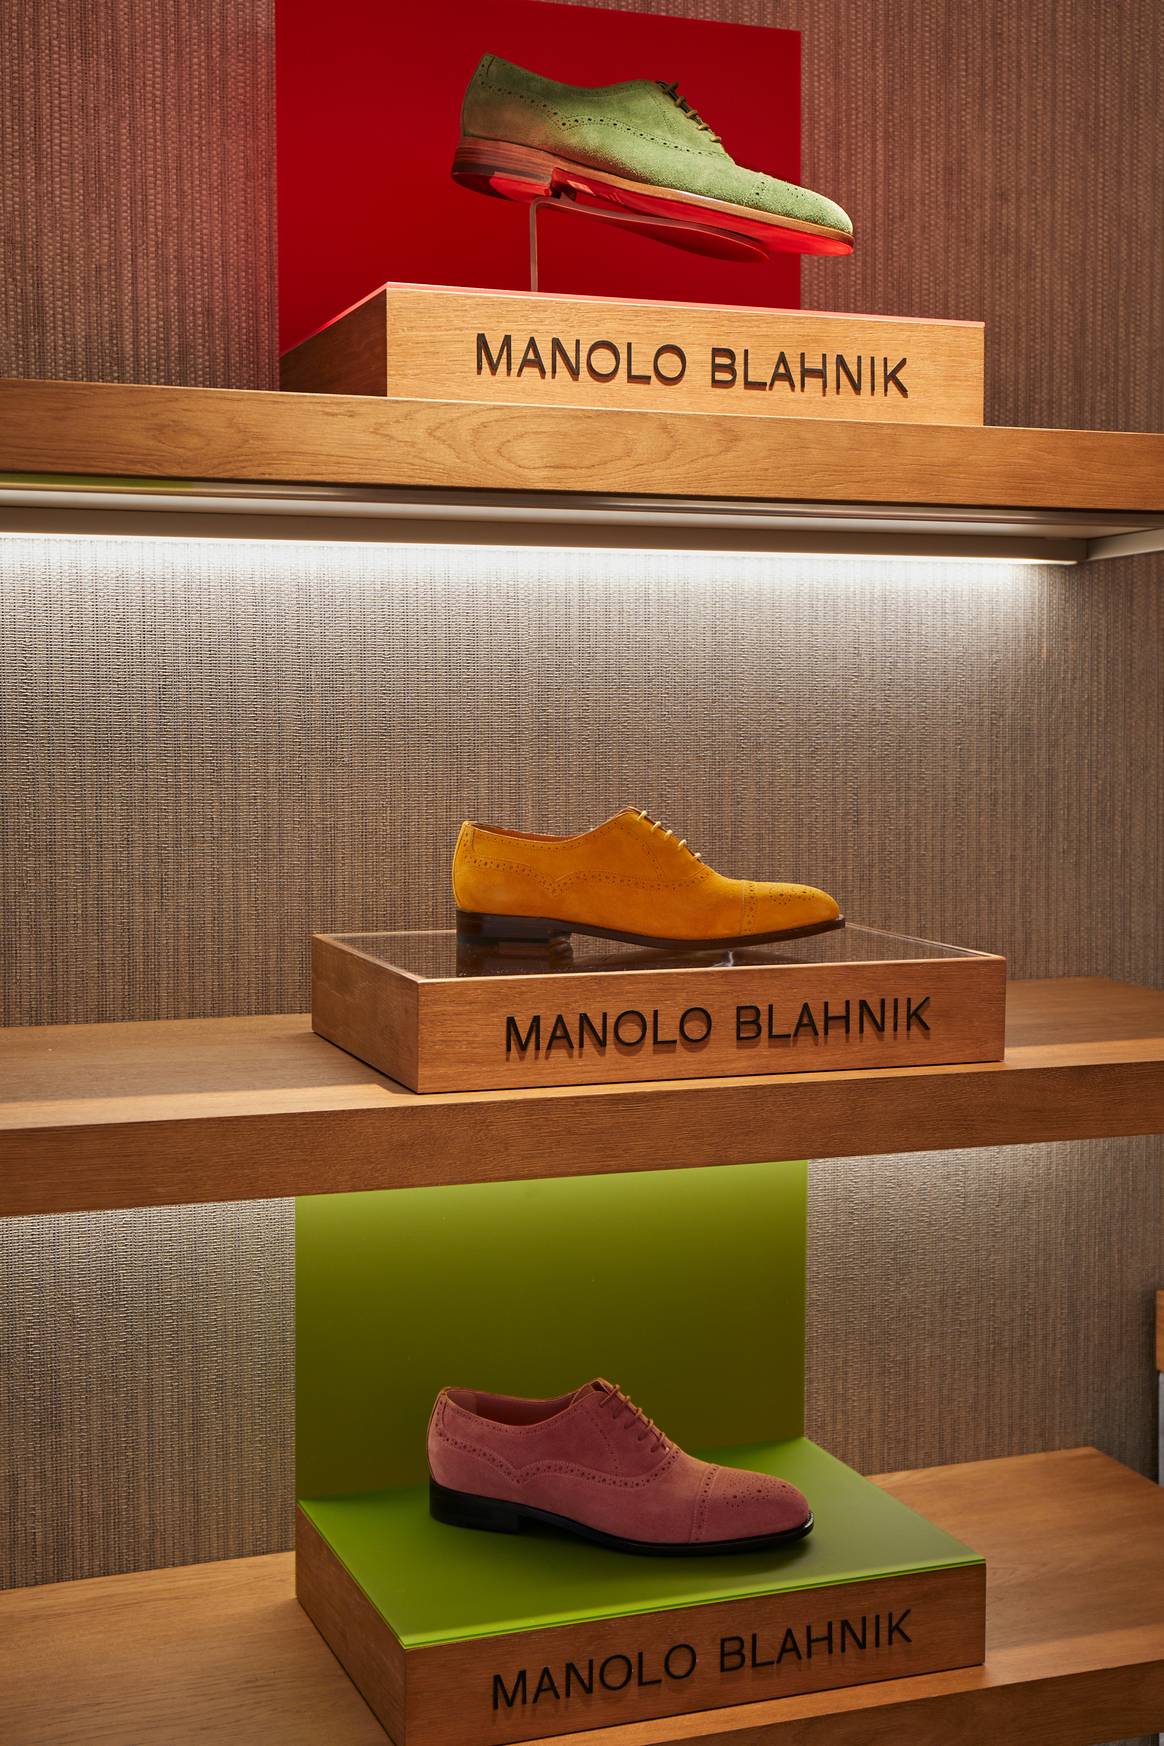 Credits: Image: Manolo Blahnik; Manolo Blahnik men’s footwear pop-up at Harrods